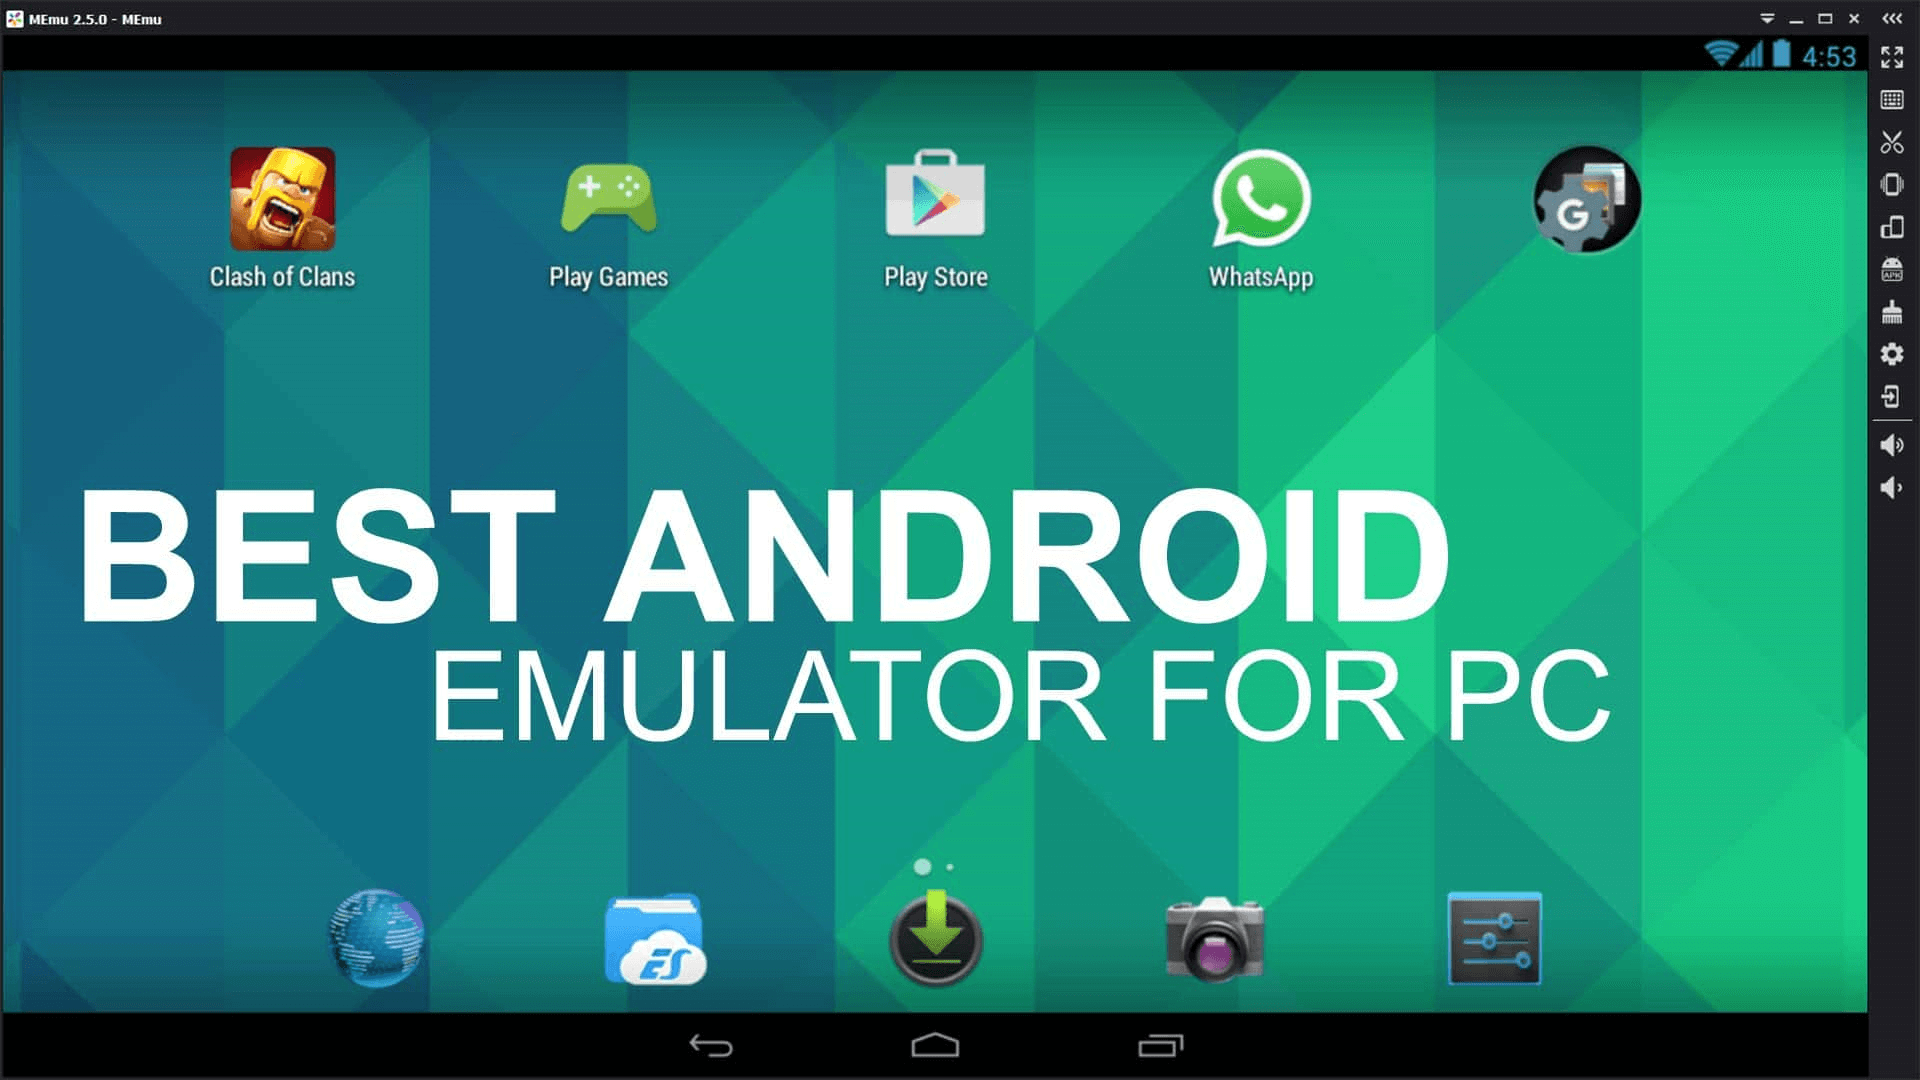 nox app player best android emulator/simulator for pc/mac